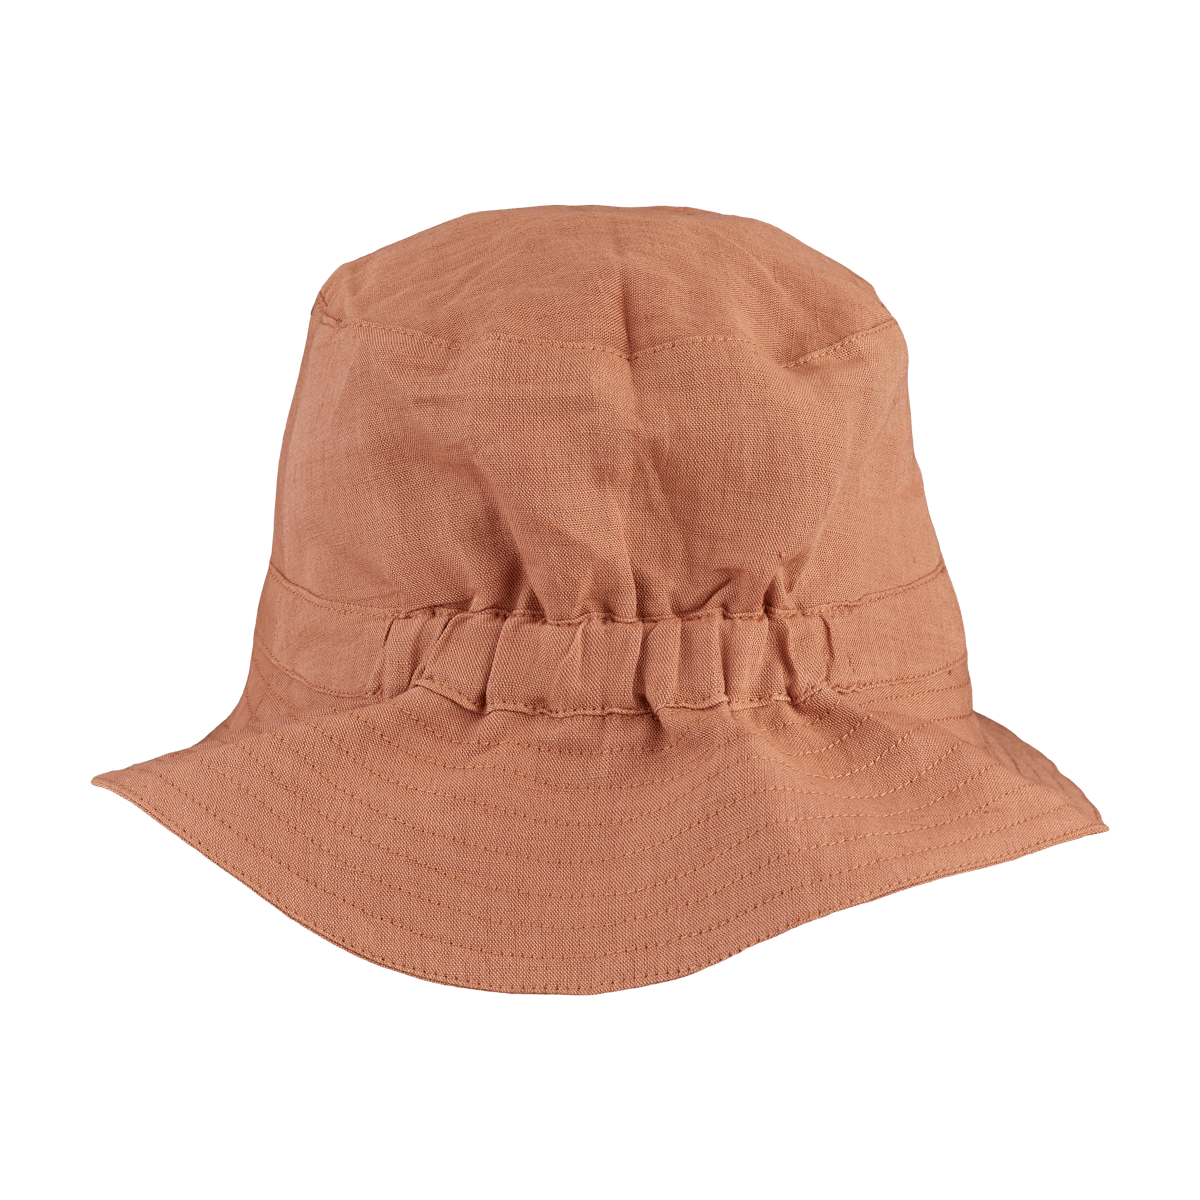 Liewood Delta bucket hat - tuscany rose sunhat organic cotton linen